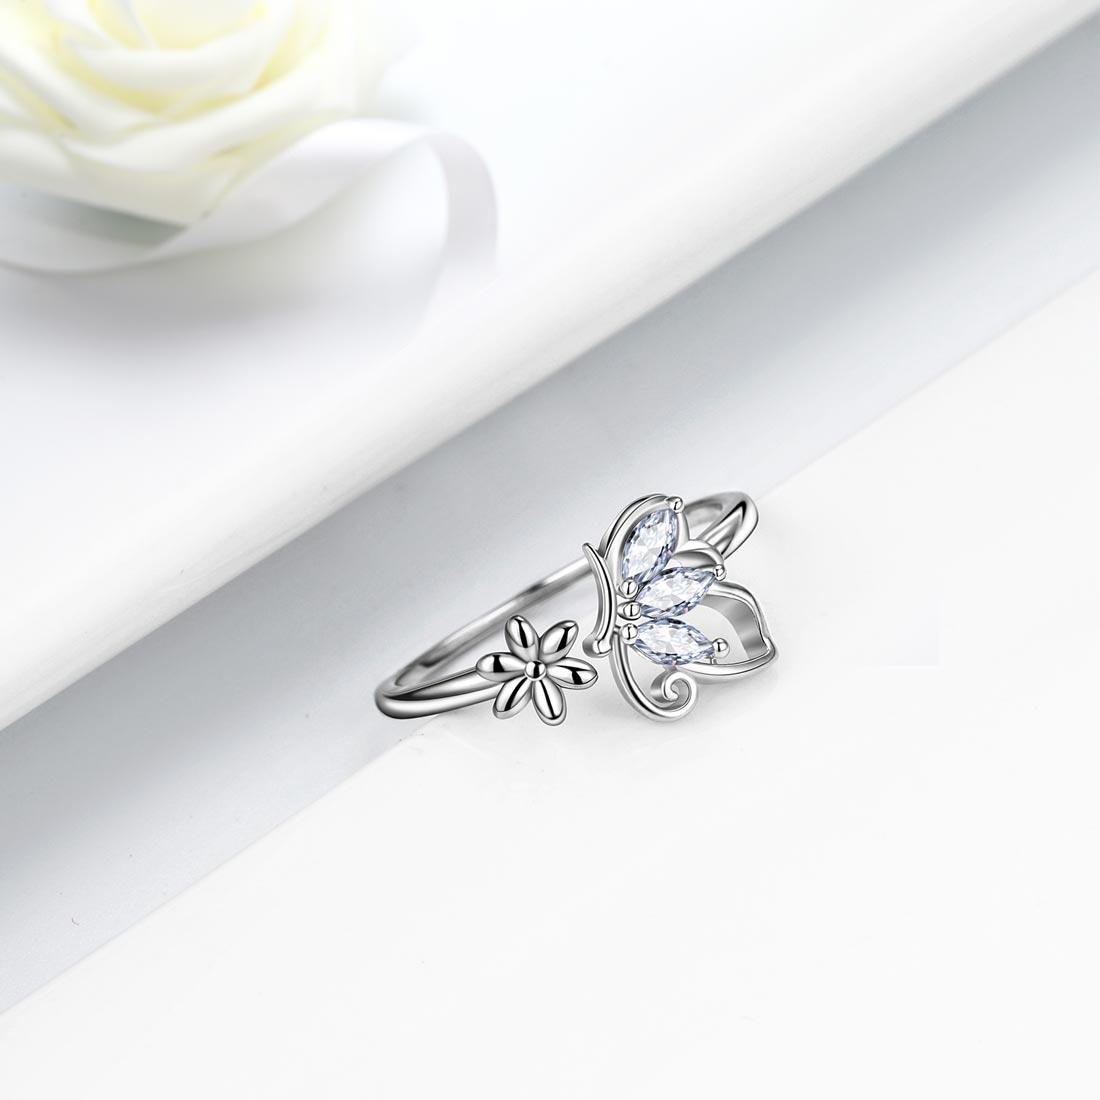 Butterfly Ring Open Birthstone April Diamond - Rings - Aurora Tears